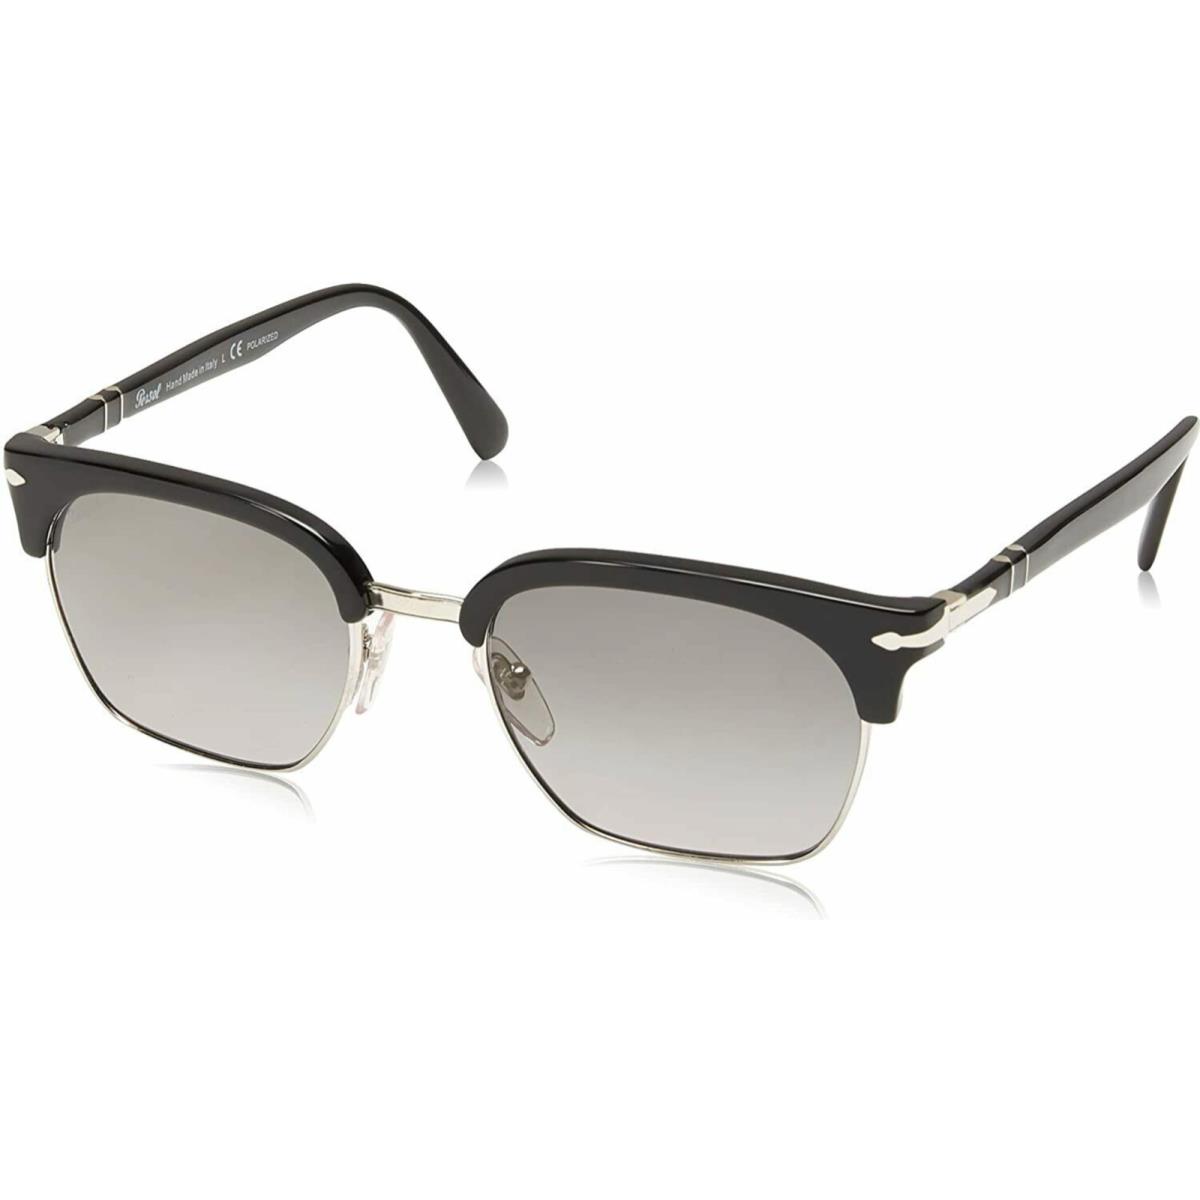 Persol Sunglasses 3199-S 1106/M3 53-20 Black Frames w/ Grey Polarized Lenses